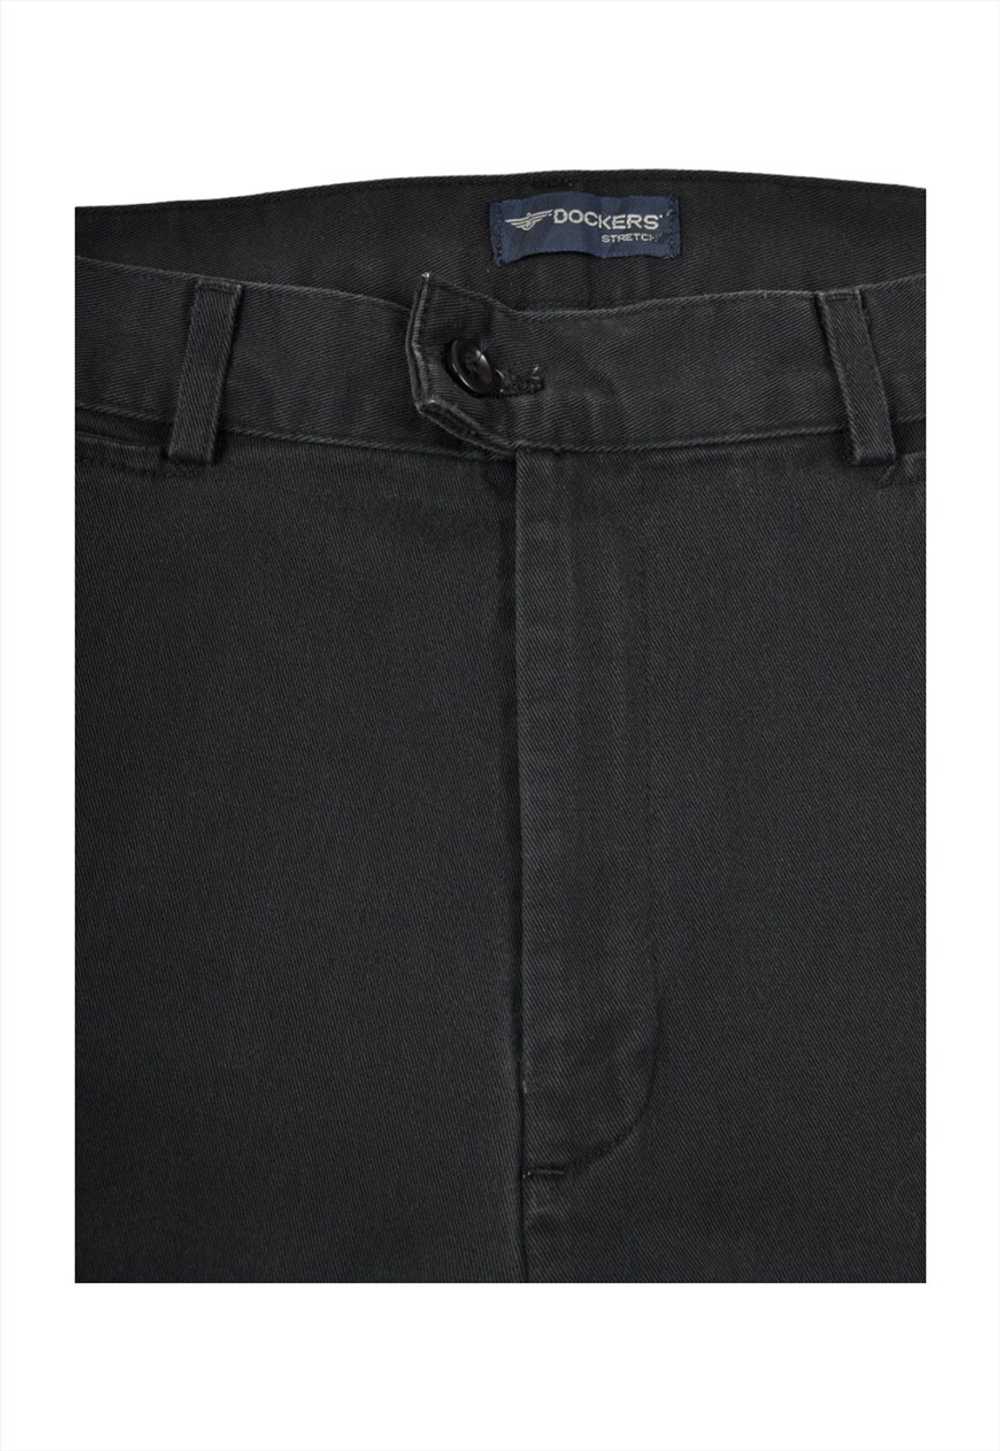 Vintage Dockers Chino Cotton Pants Black Ladies W… - image 4